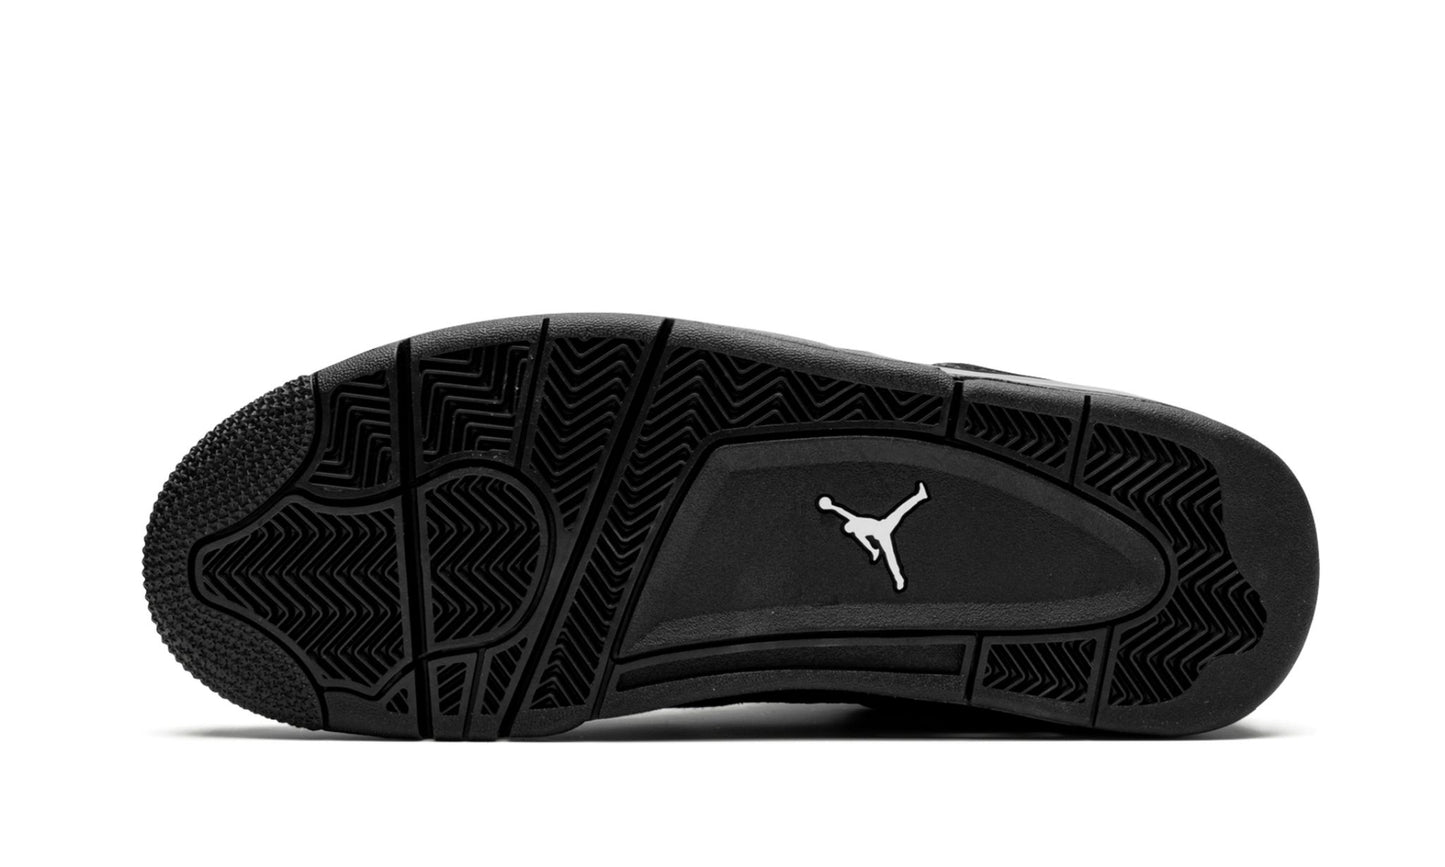 Air Jordan 4 Black Cat